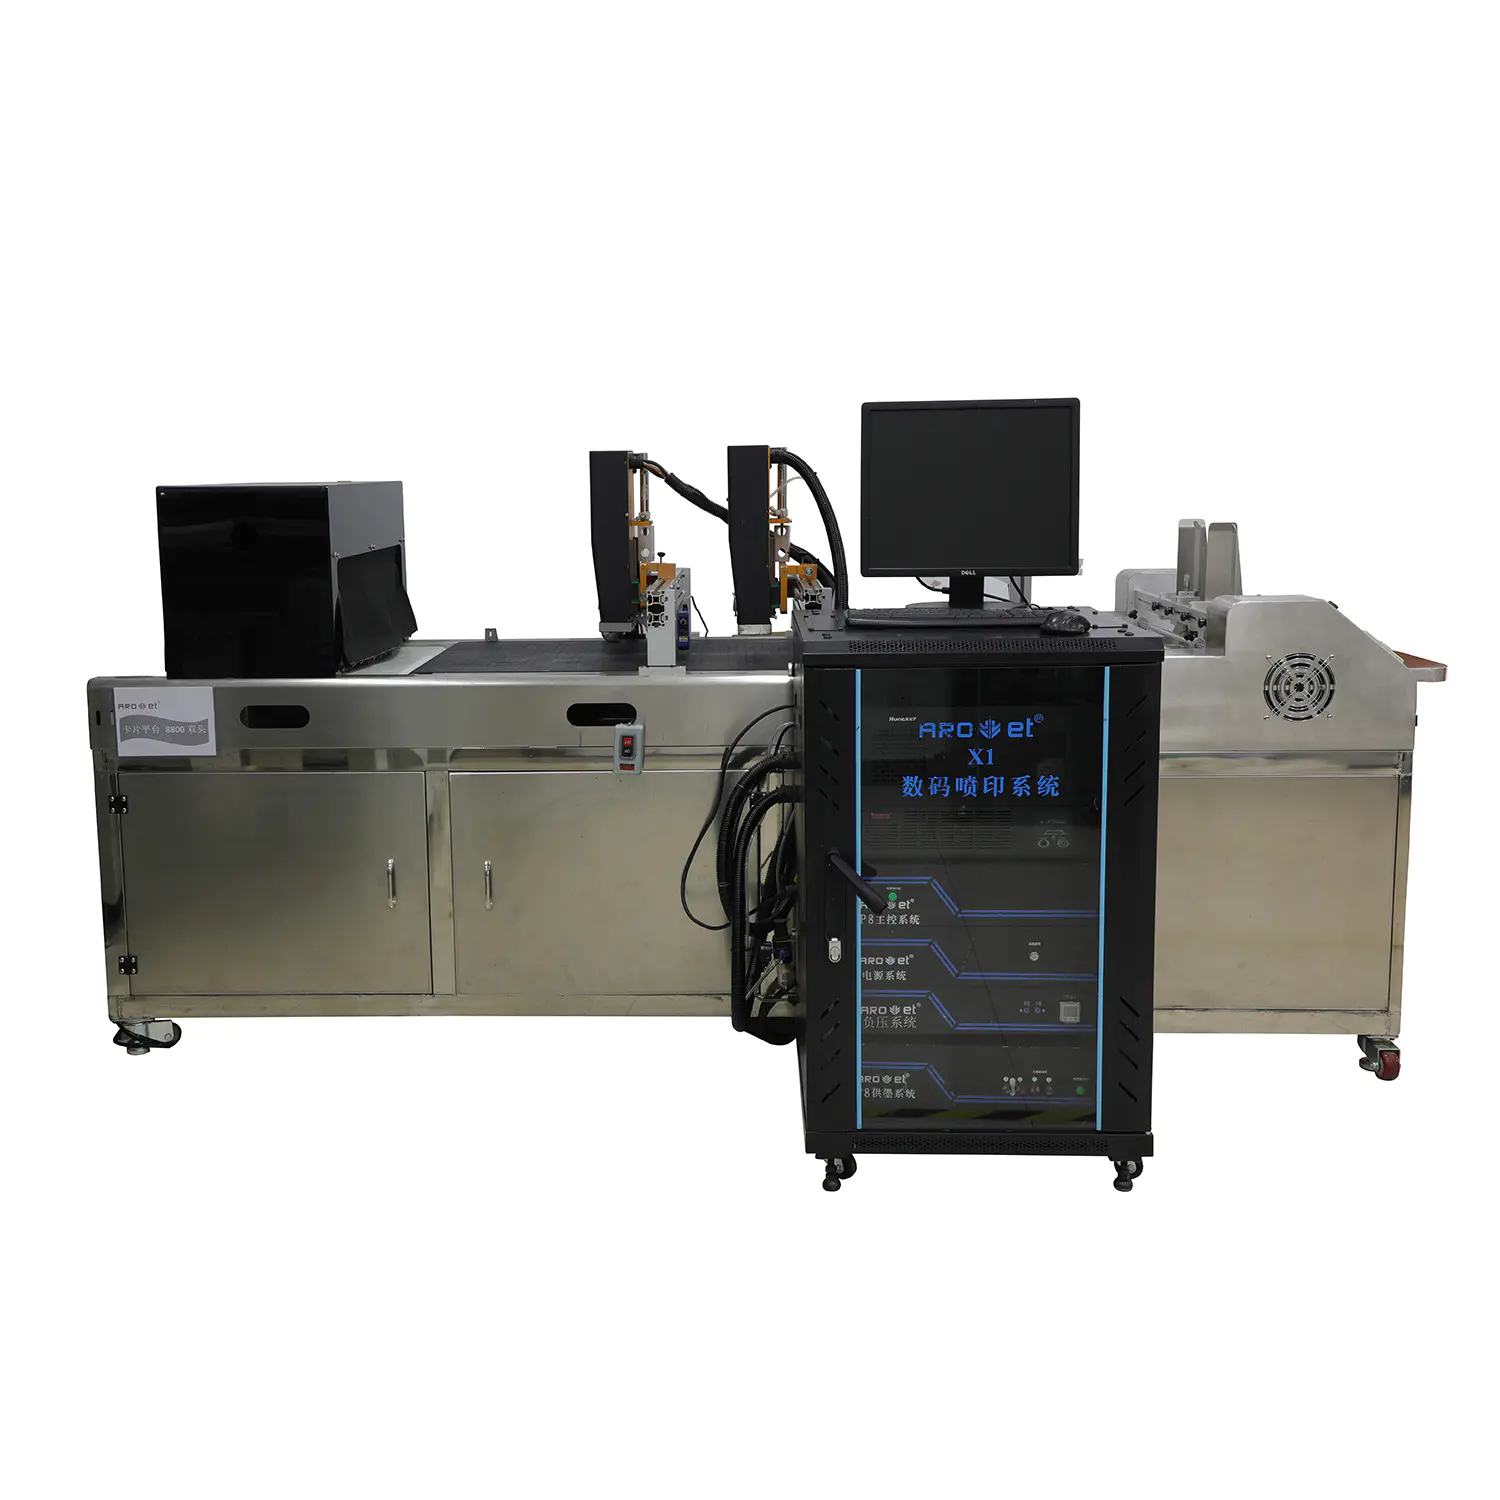 Tickets and Tags (HF/UHF) Digital Printing Machine